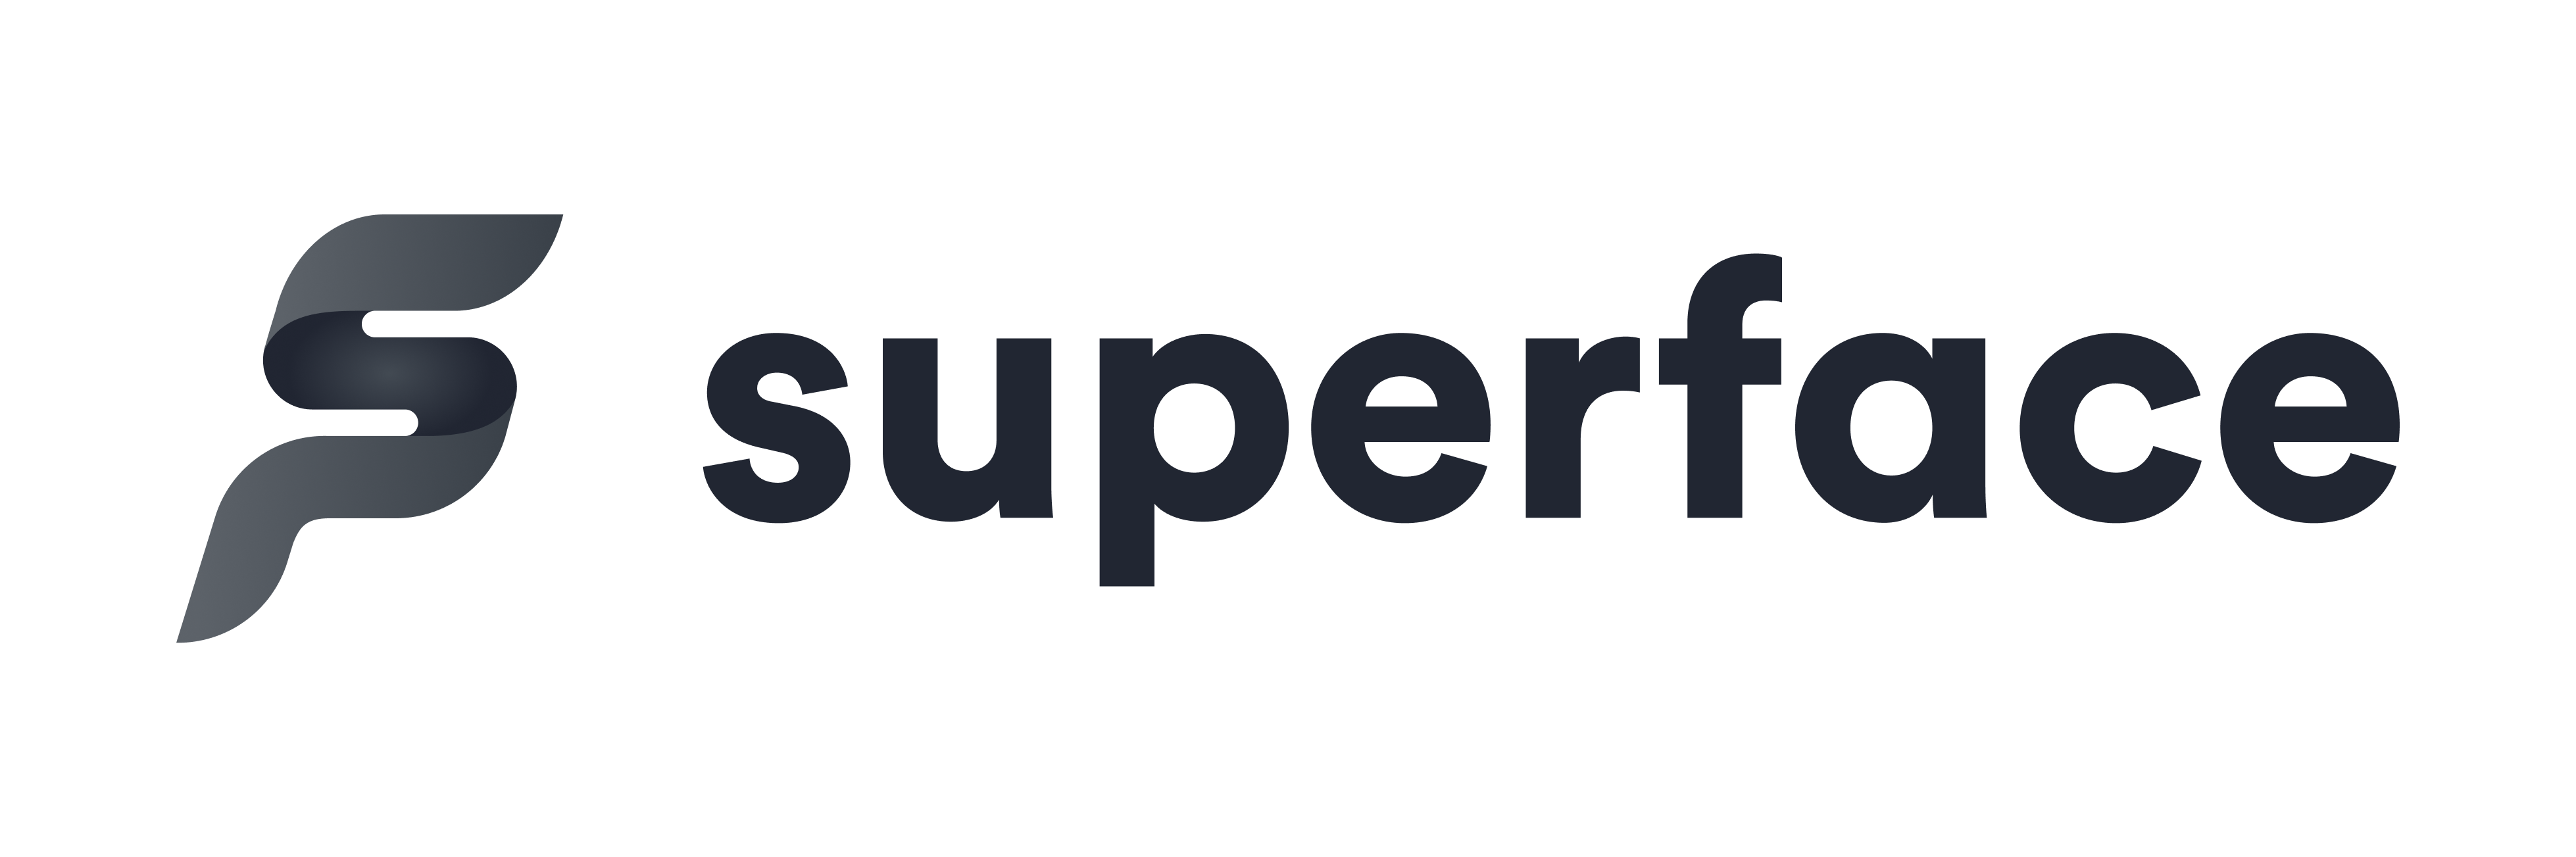 Superface_logo_MELIORO